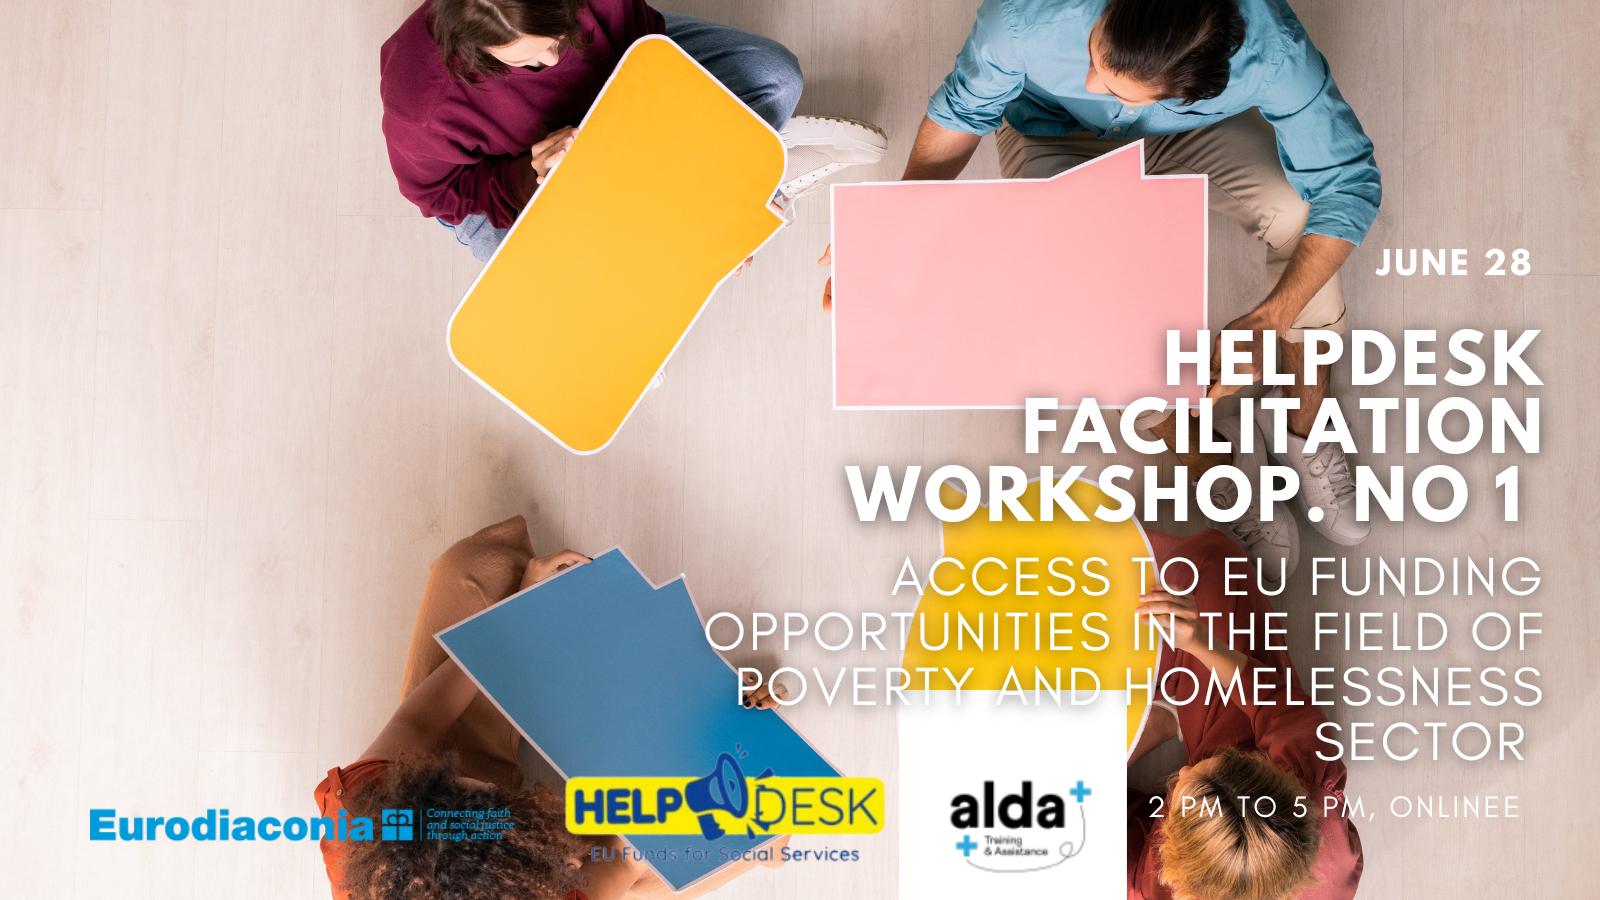 Helpdesk facilitation workshop. No 1 |  Public Event Online